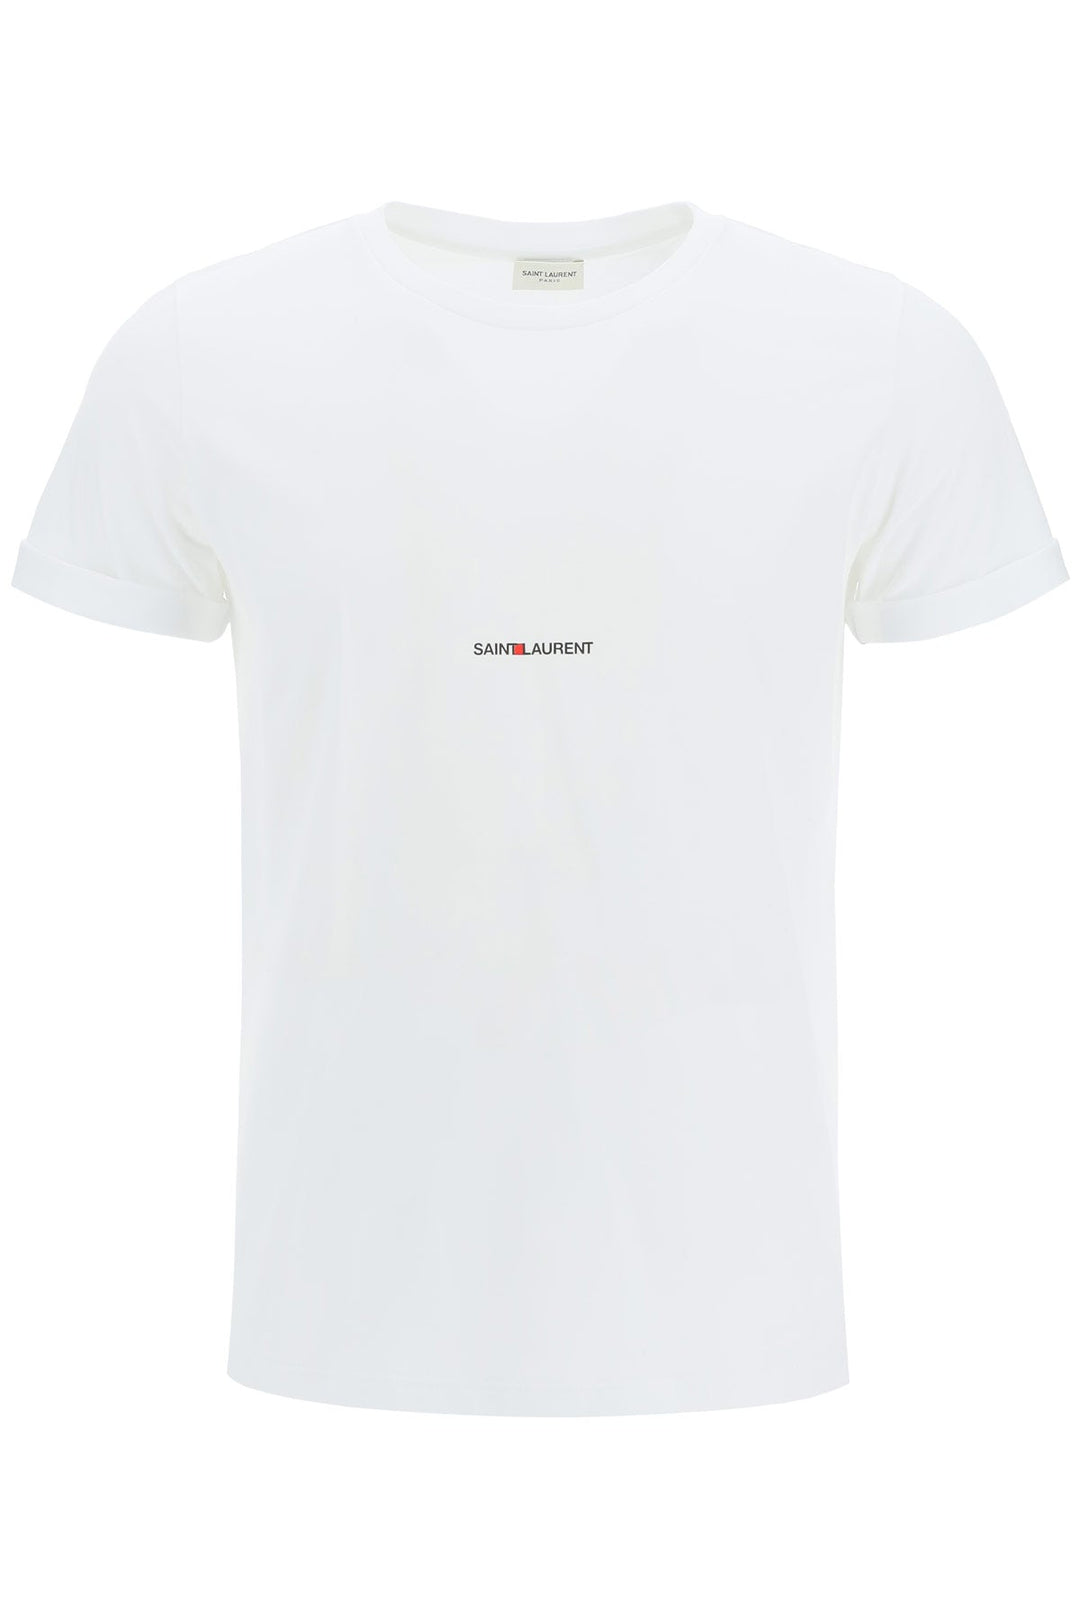 T Shirt Stampa Logo - Saint Laurent - Uomo